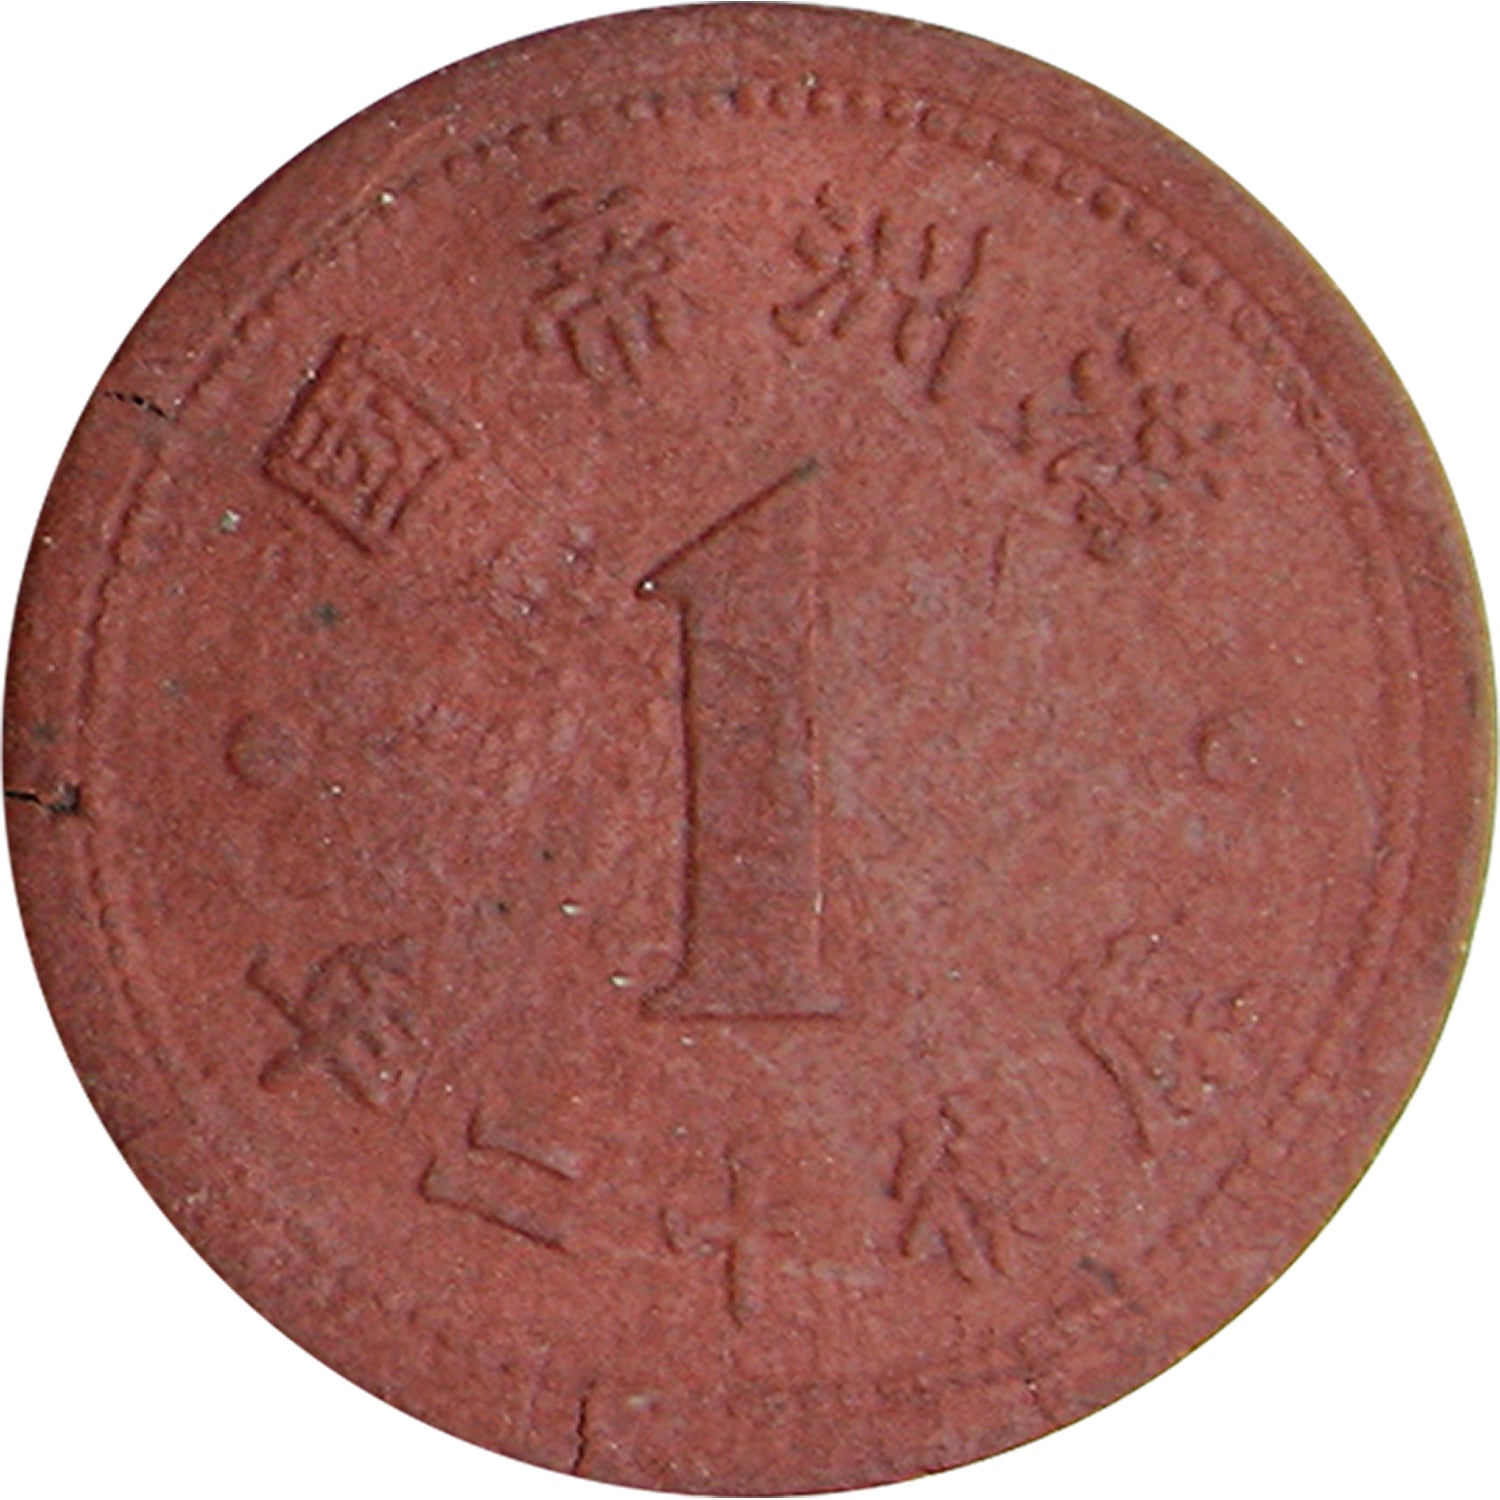 Emergency Money of the Empire of Manchukuo